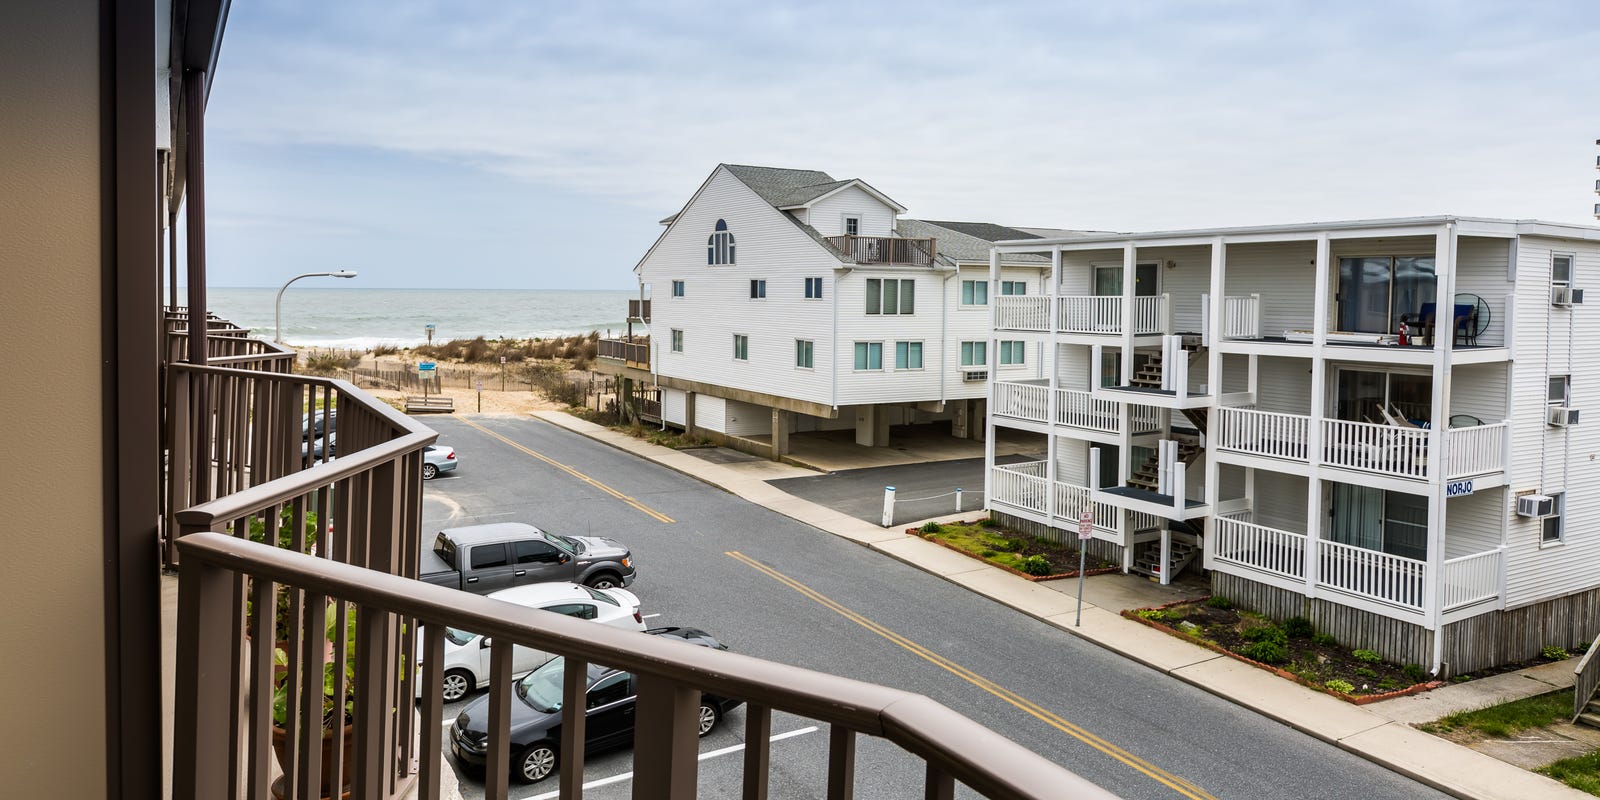 Ocean City S Challenge Rental Violators Airbnb And Now A